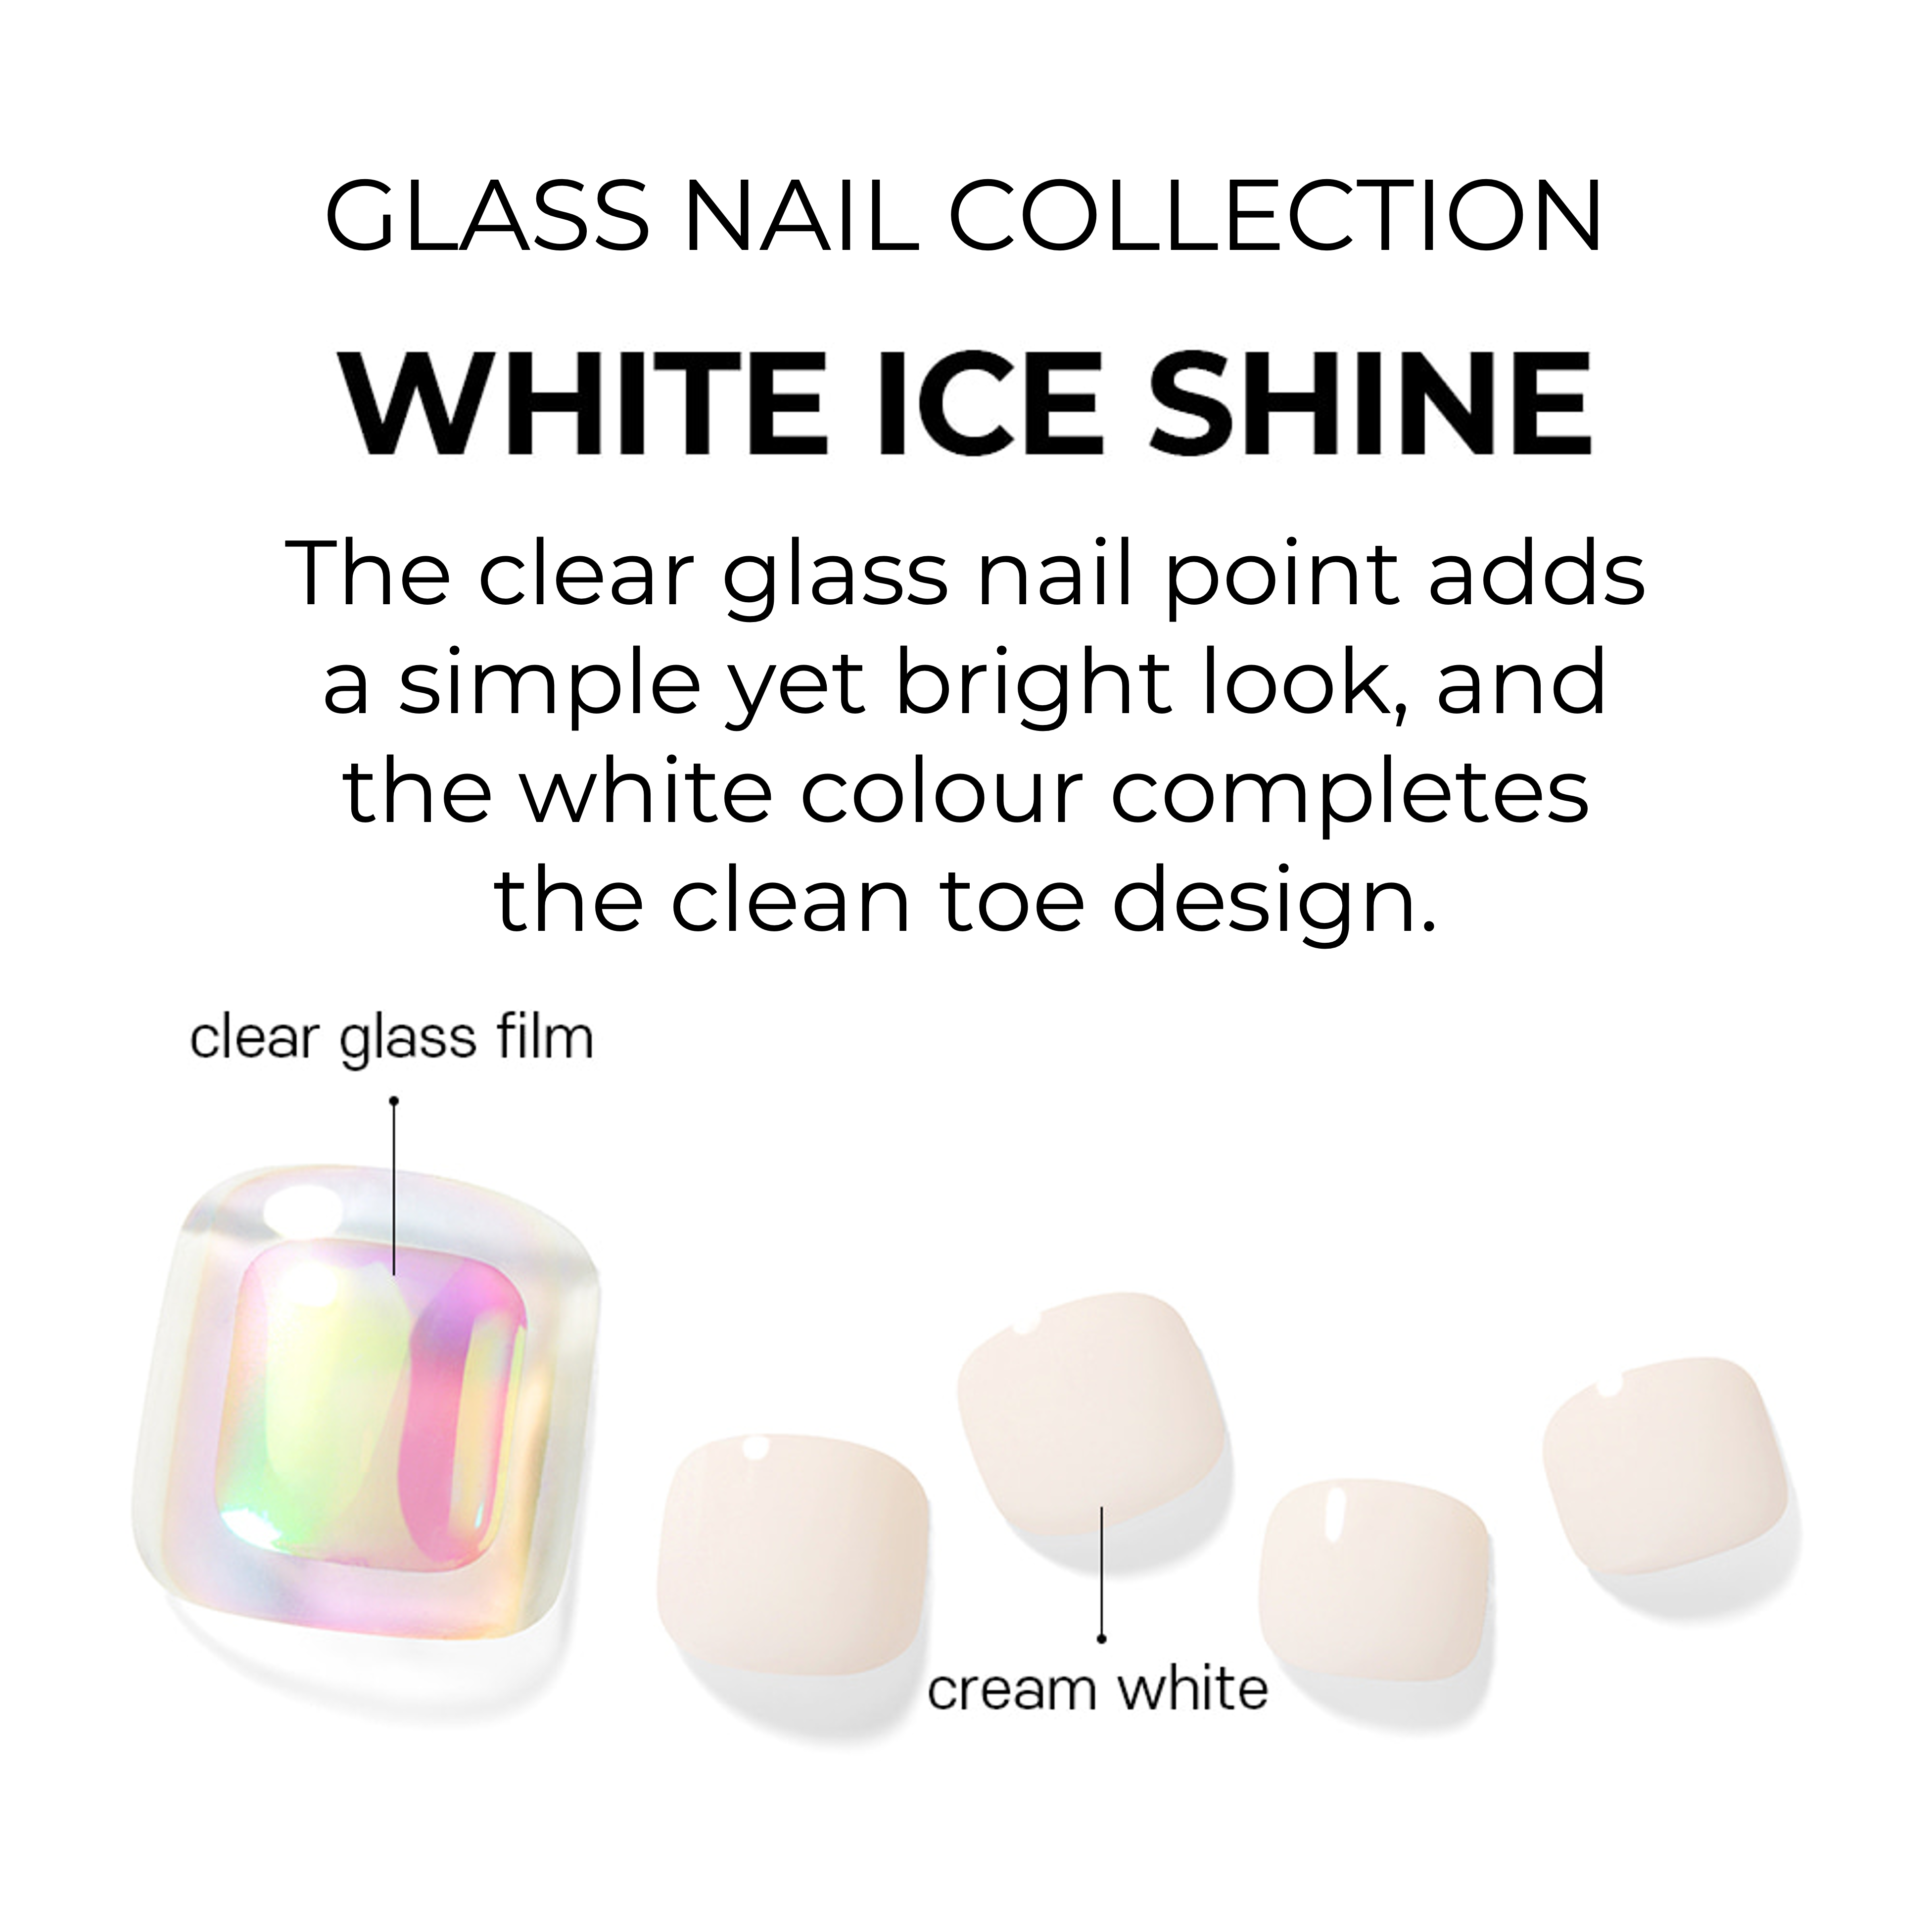 [GLASS NAIL COLLECTION] MAGIC PRESS PEDI - WHITE ICE SHINE